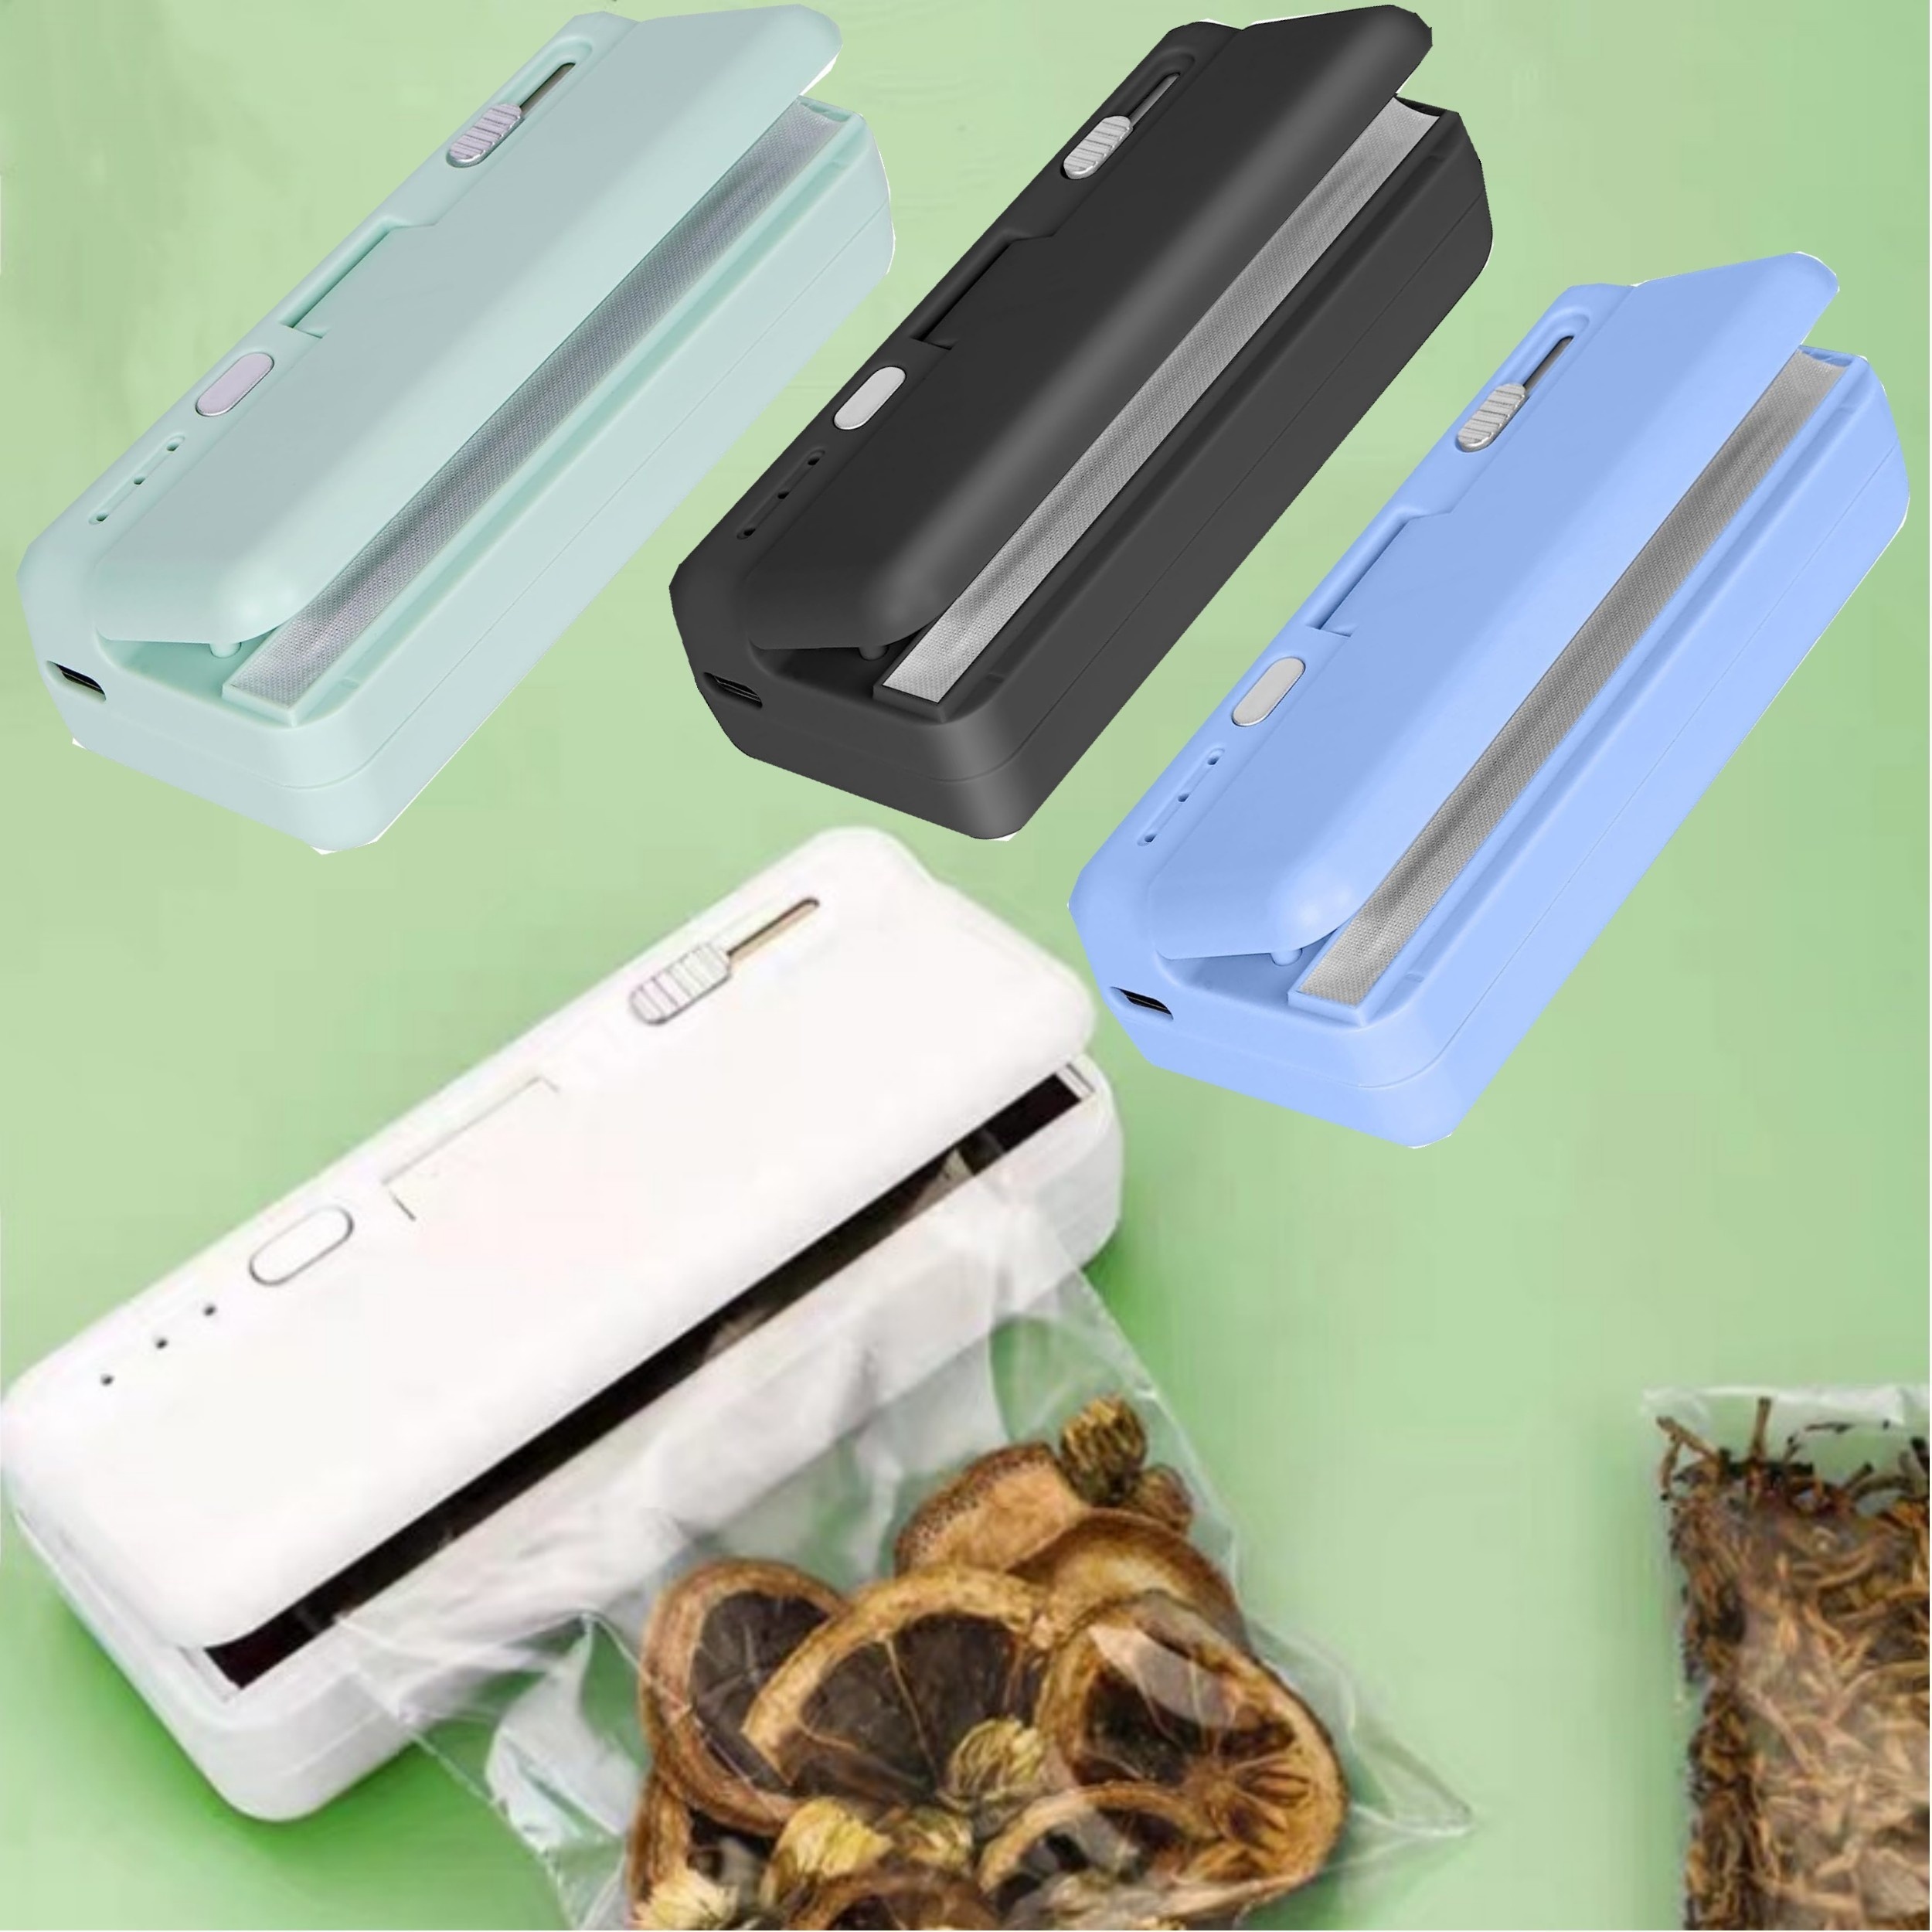 Mini Bag Sealer Heat Seal, Handheld Food Sealer Bag Resealer For Food  Storage, Portable Smart Heat Sealer Machine For Chip Bags, Plastic Bags,  Snack Bags Small Appliance - Temu